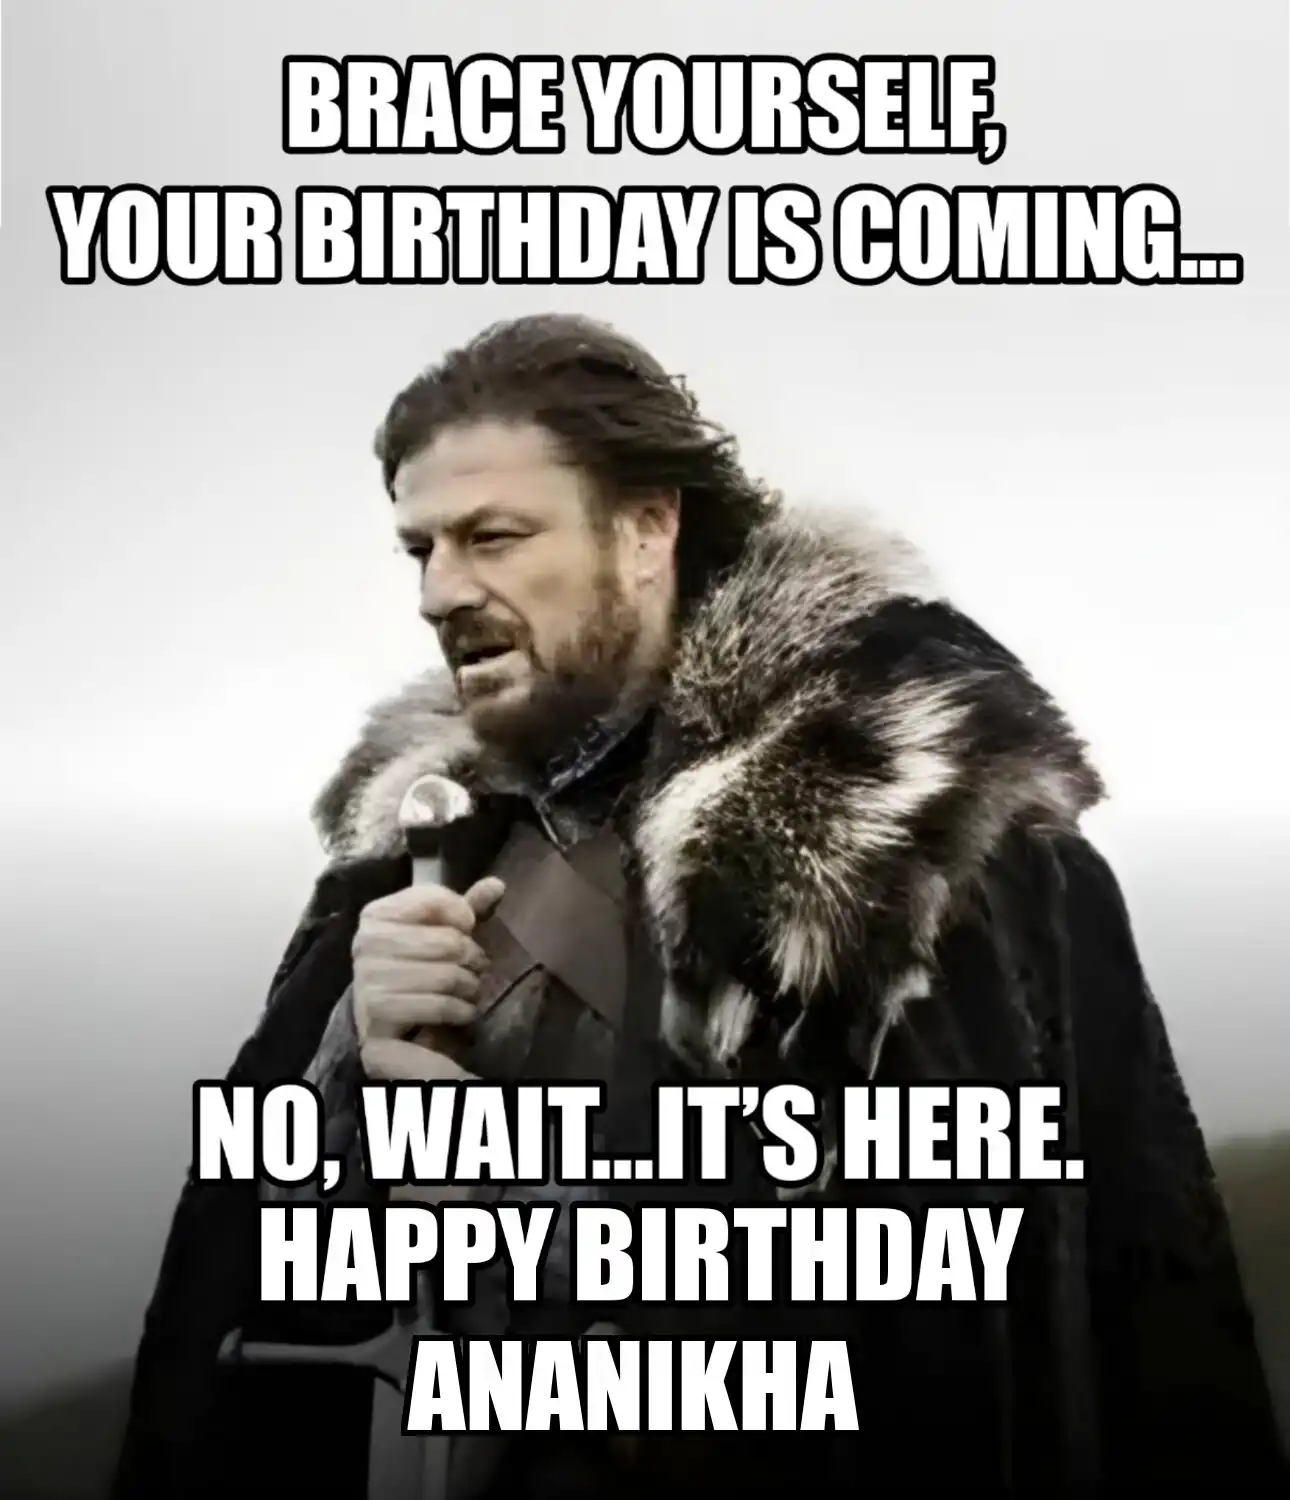 Happy Birthday Ananikha Brace Yourself Your Birthday Is Coming Meme